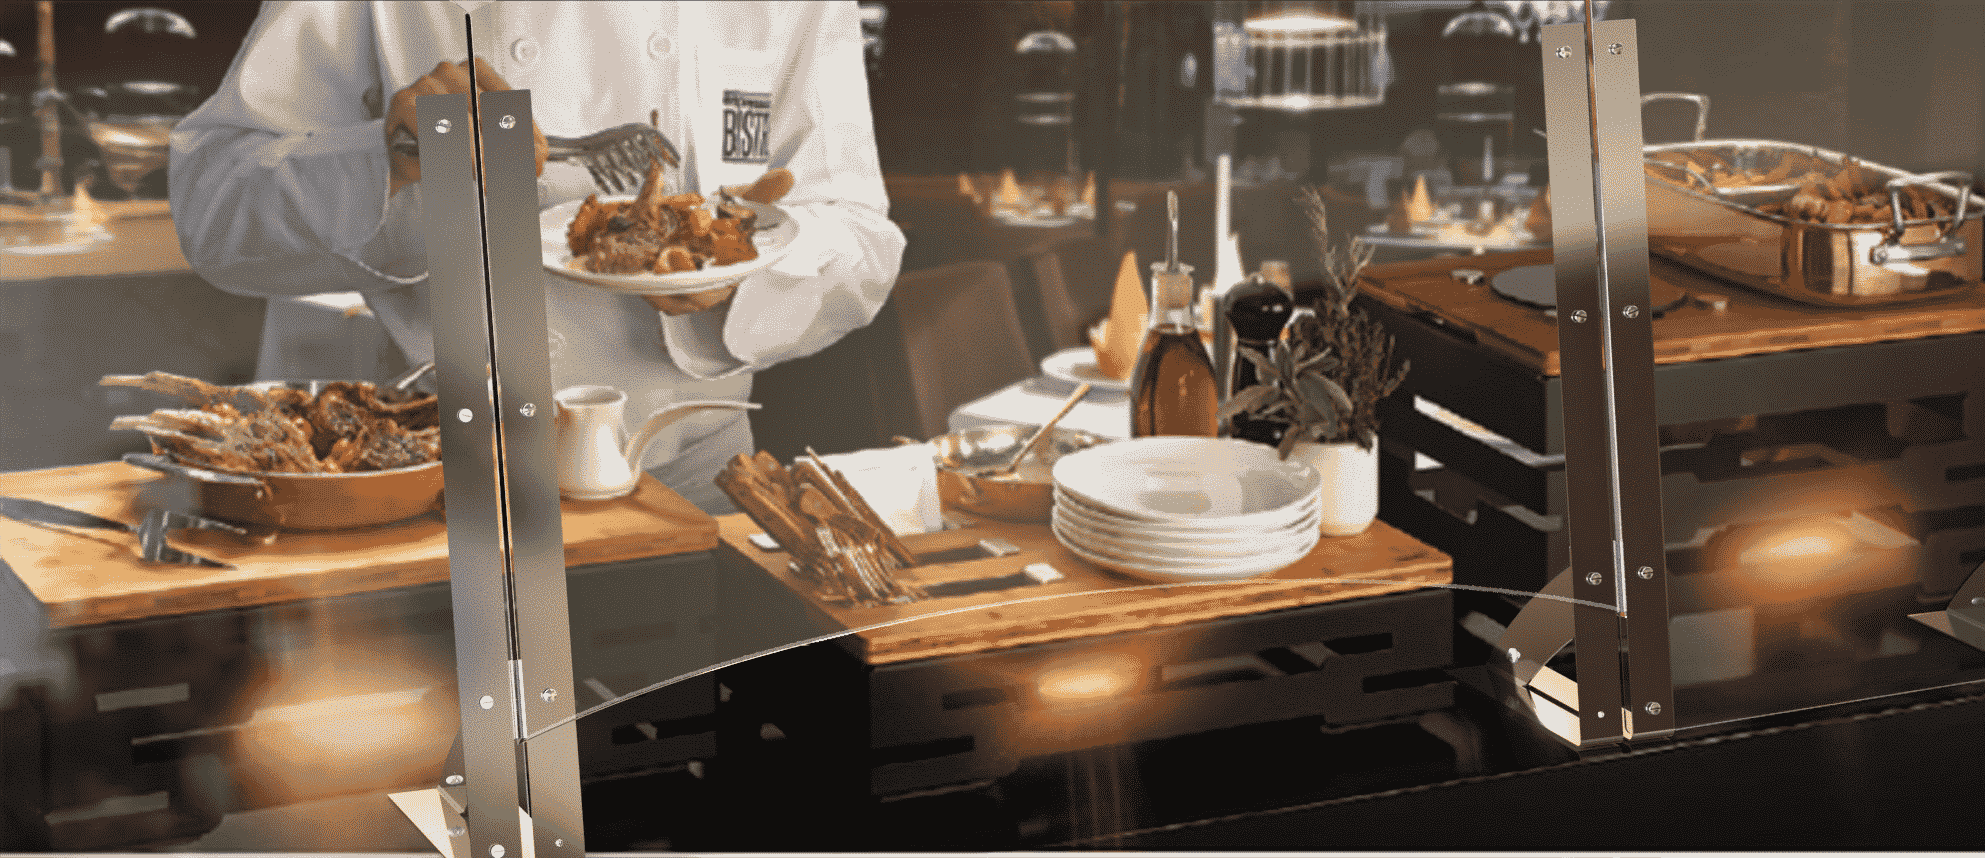 Mismatched Vintage Dessert Plates, Wall Decor, Wedding Reception Dishes,  Vintage Table Setting -  Hong Kong